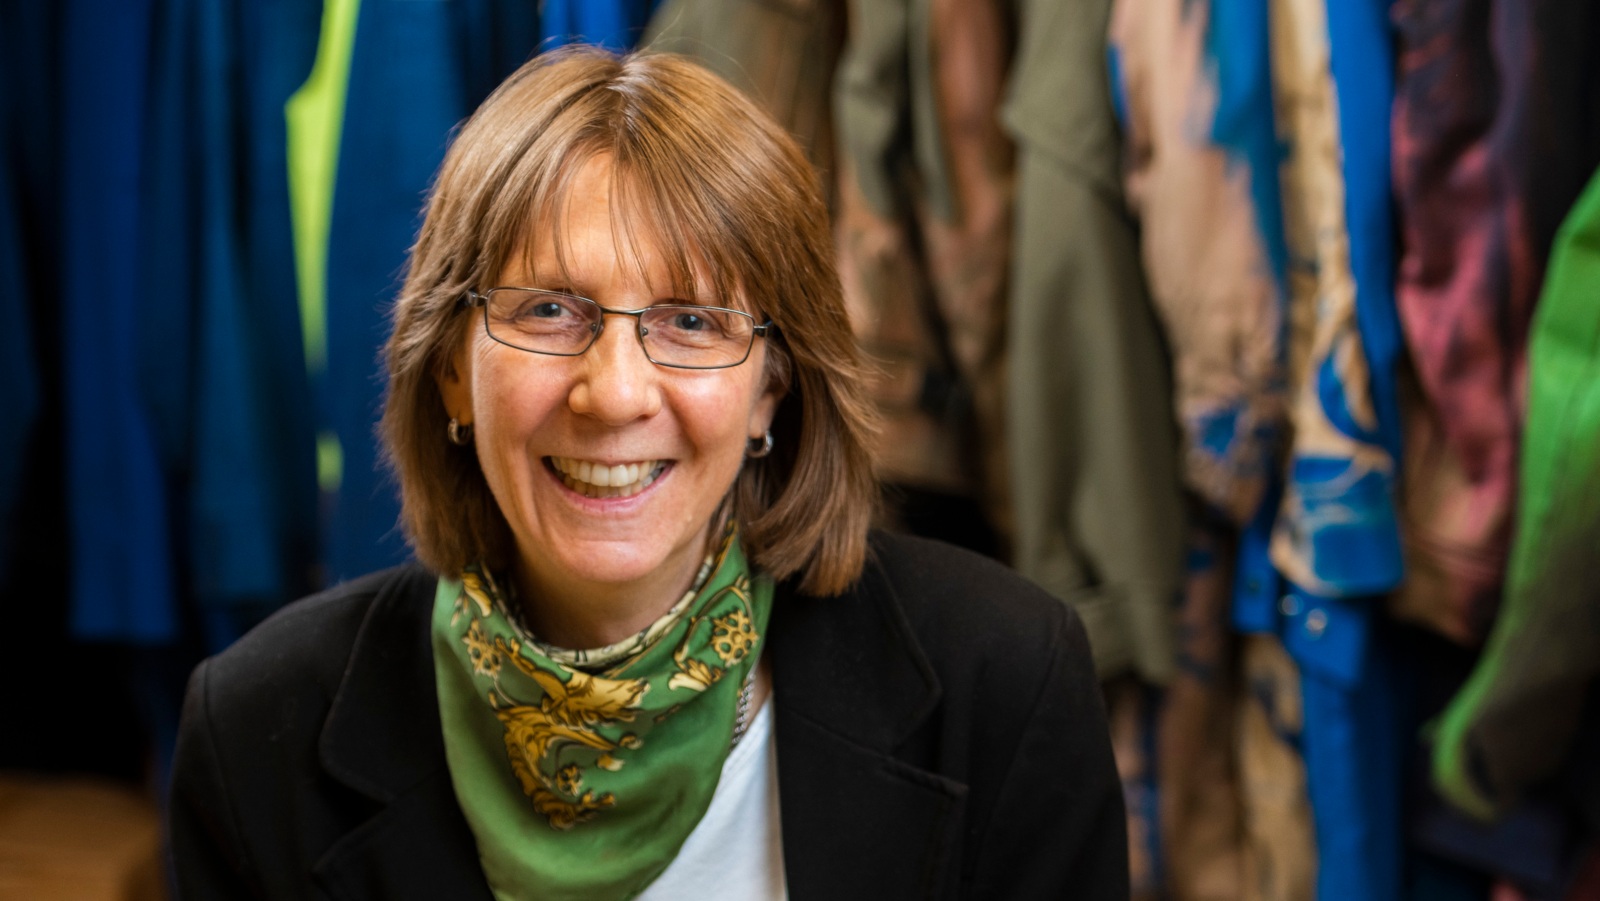 Textiles scientist Patricia Dolez